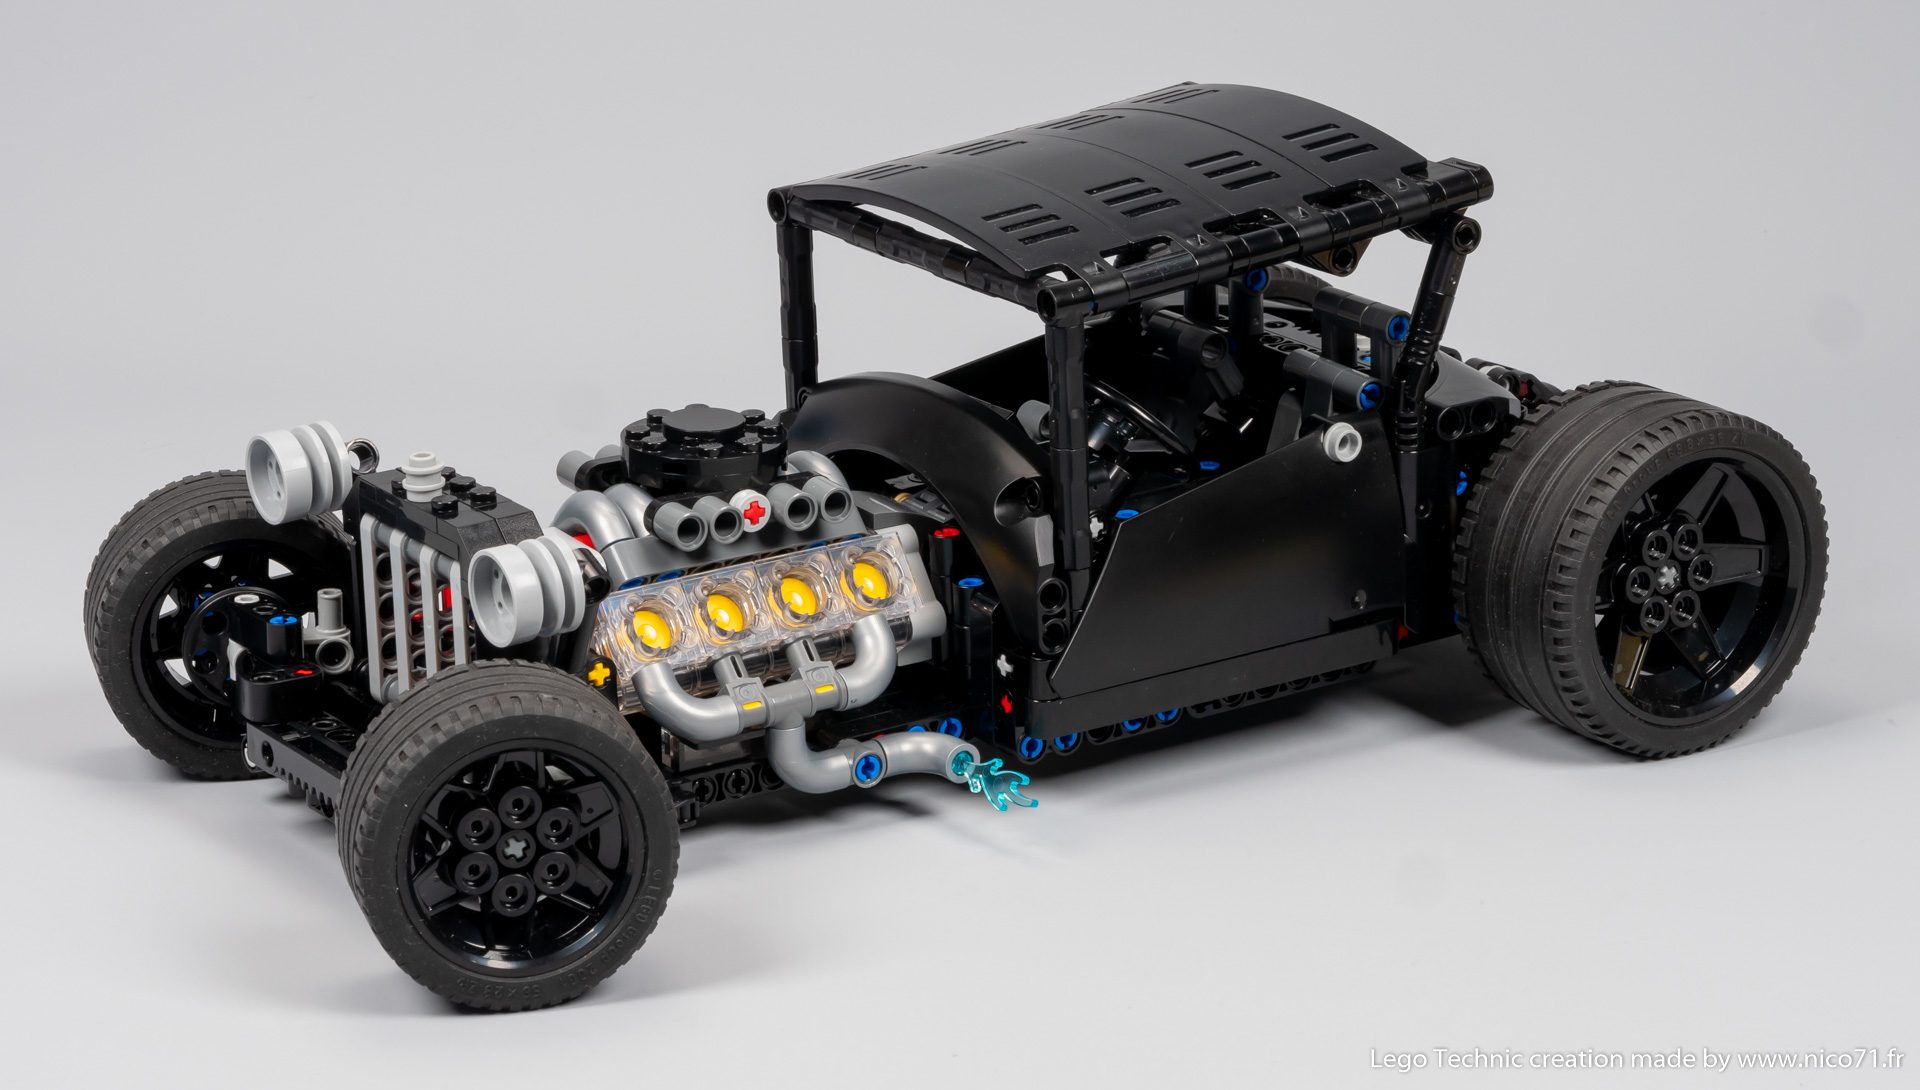 LEGO Vespa wheel hack on a cool custom Hot Rod + mini Vespa 